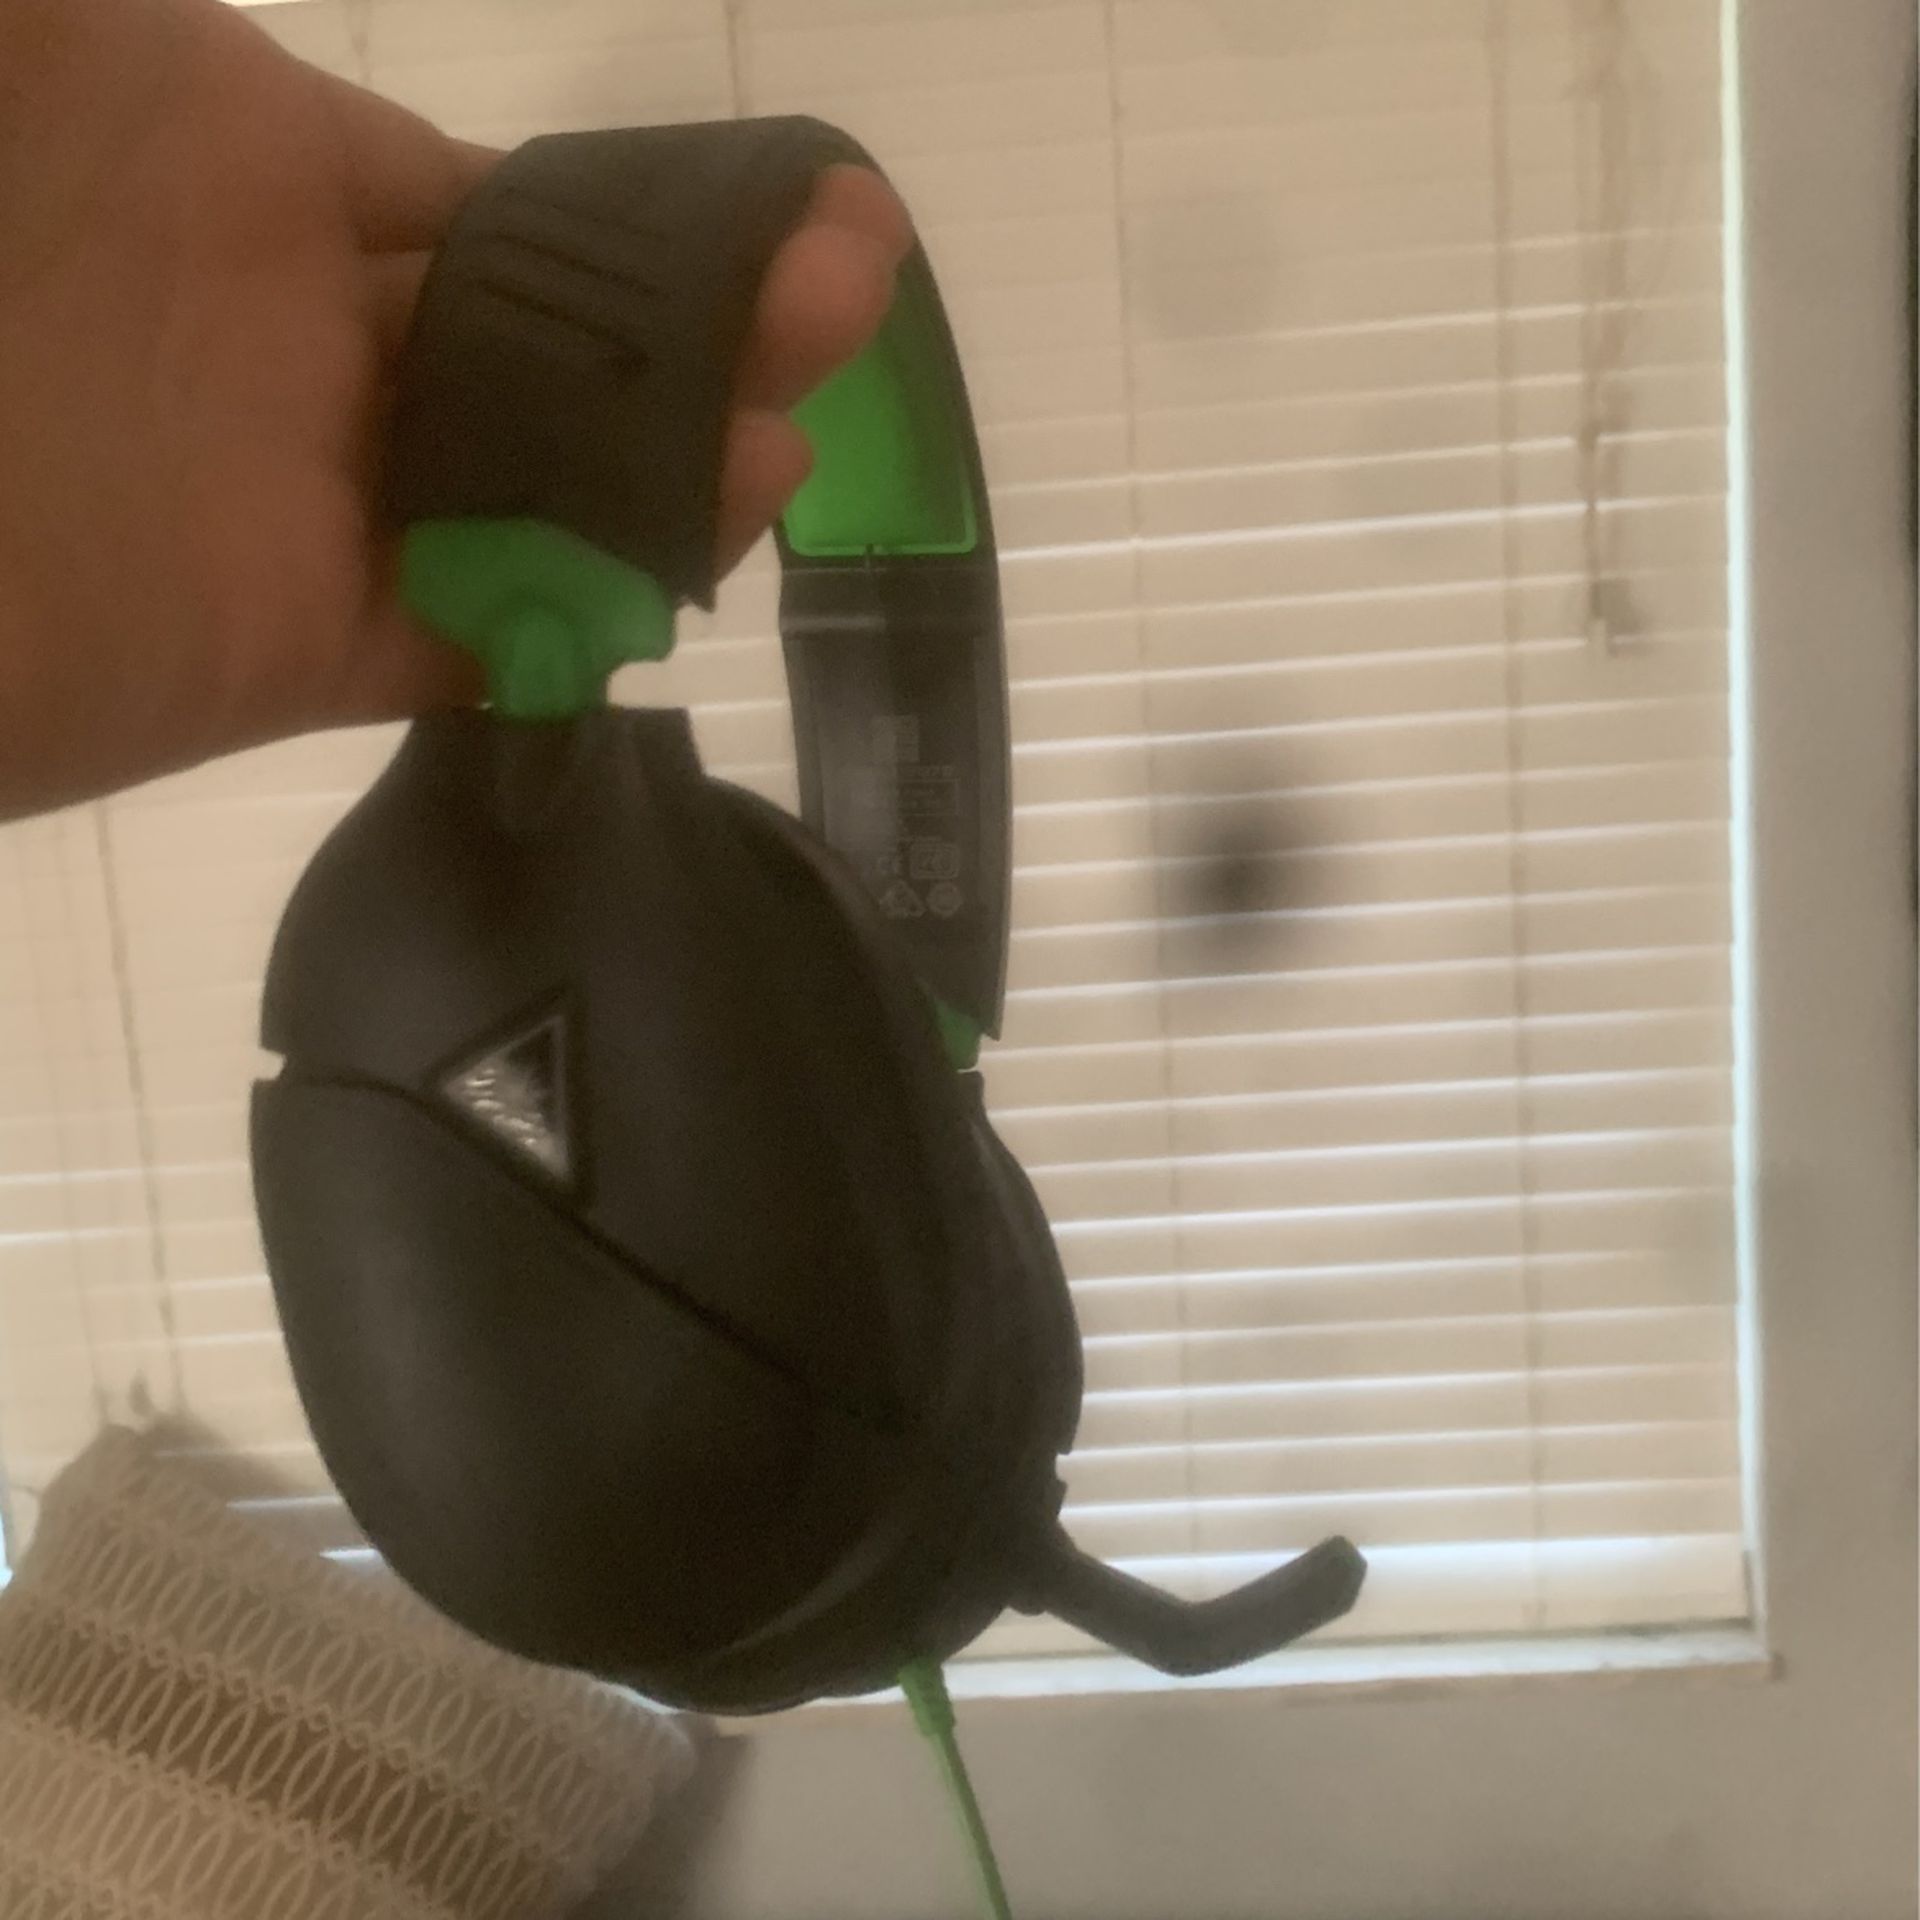 Xbox One Turtle Beach Headset